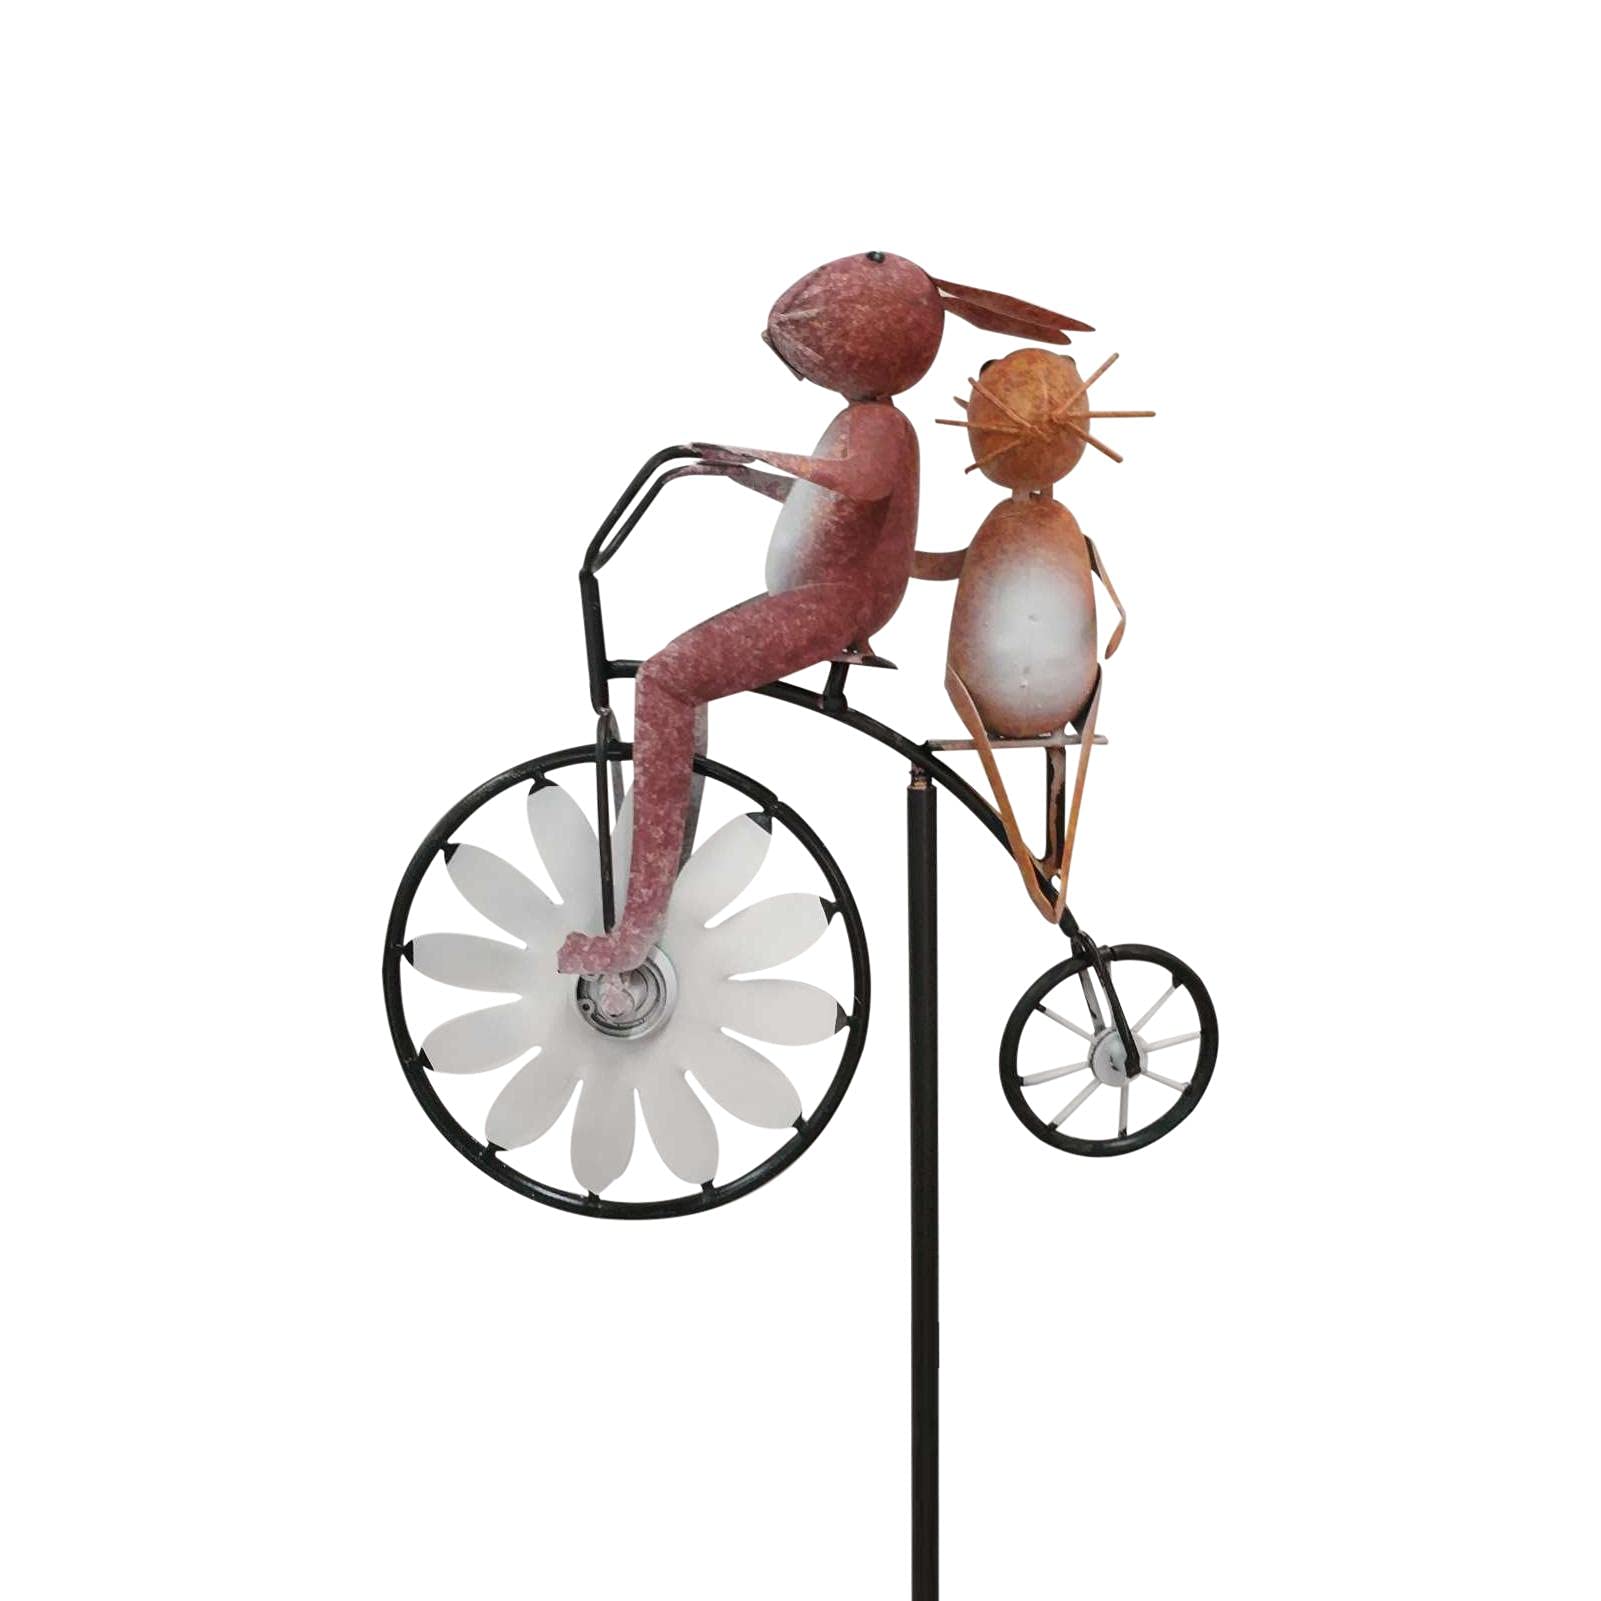 Windrad Fahrrad Deko Fahrrad Garten Vintage Fahrrad Metall Wind Spinner Mit Stehpol Garten Garten Rasen Dekoration